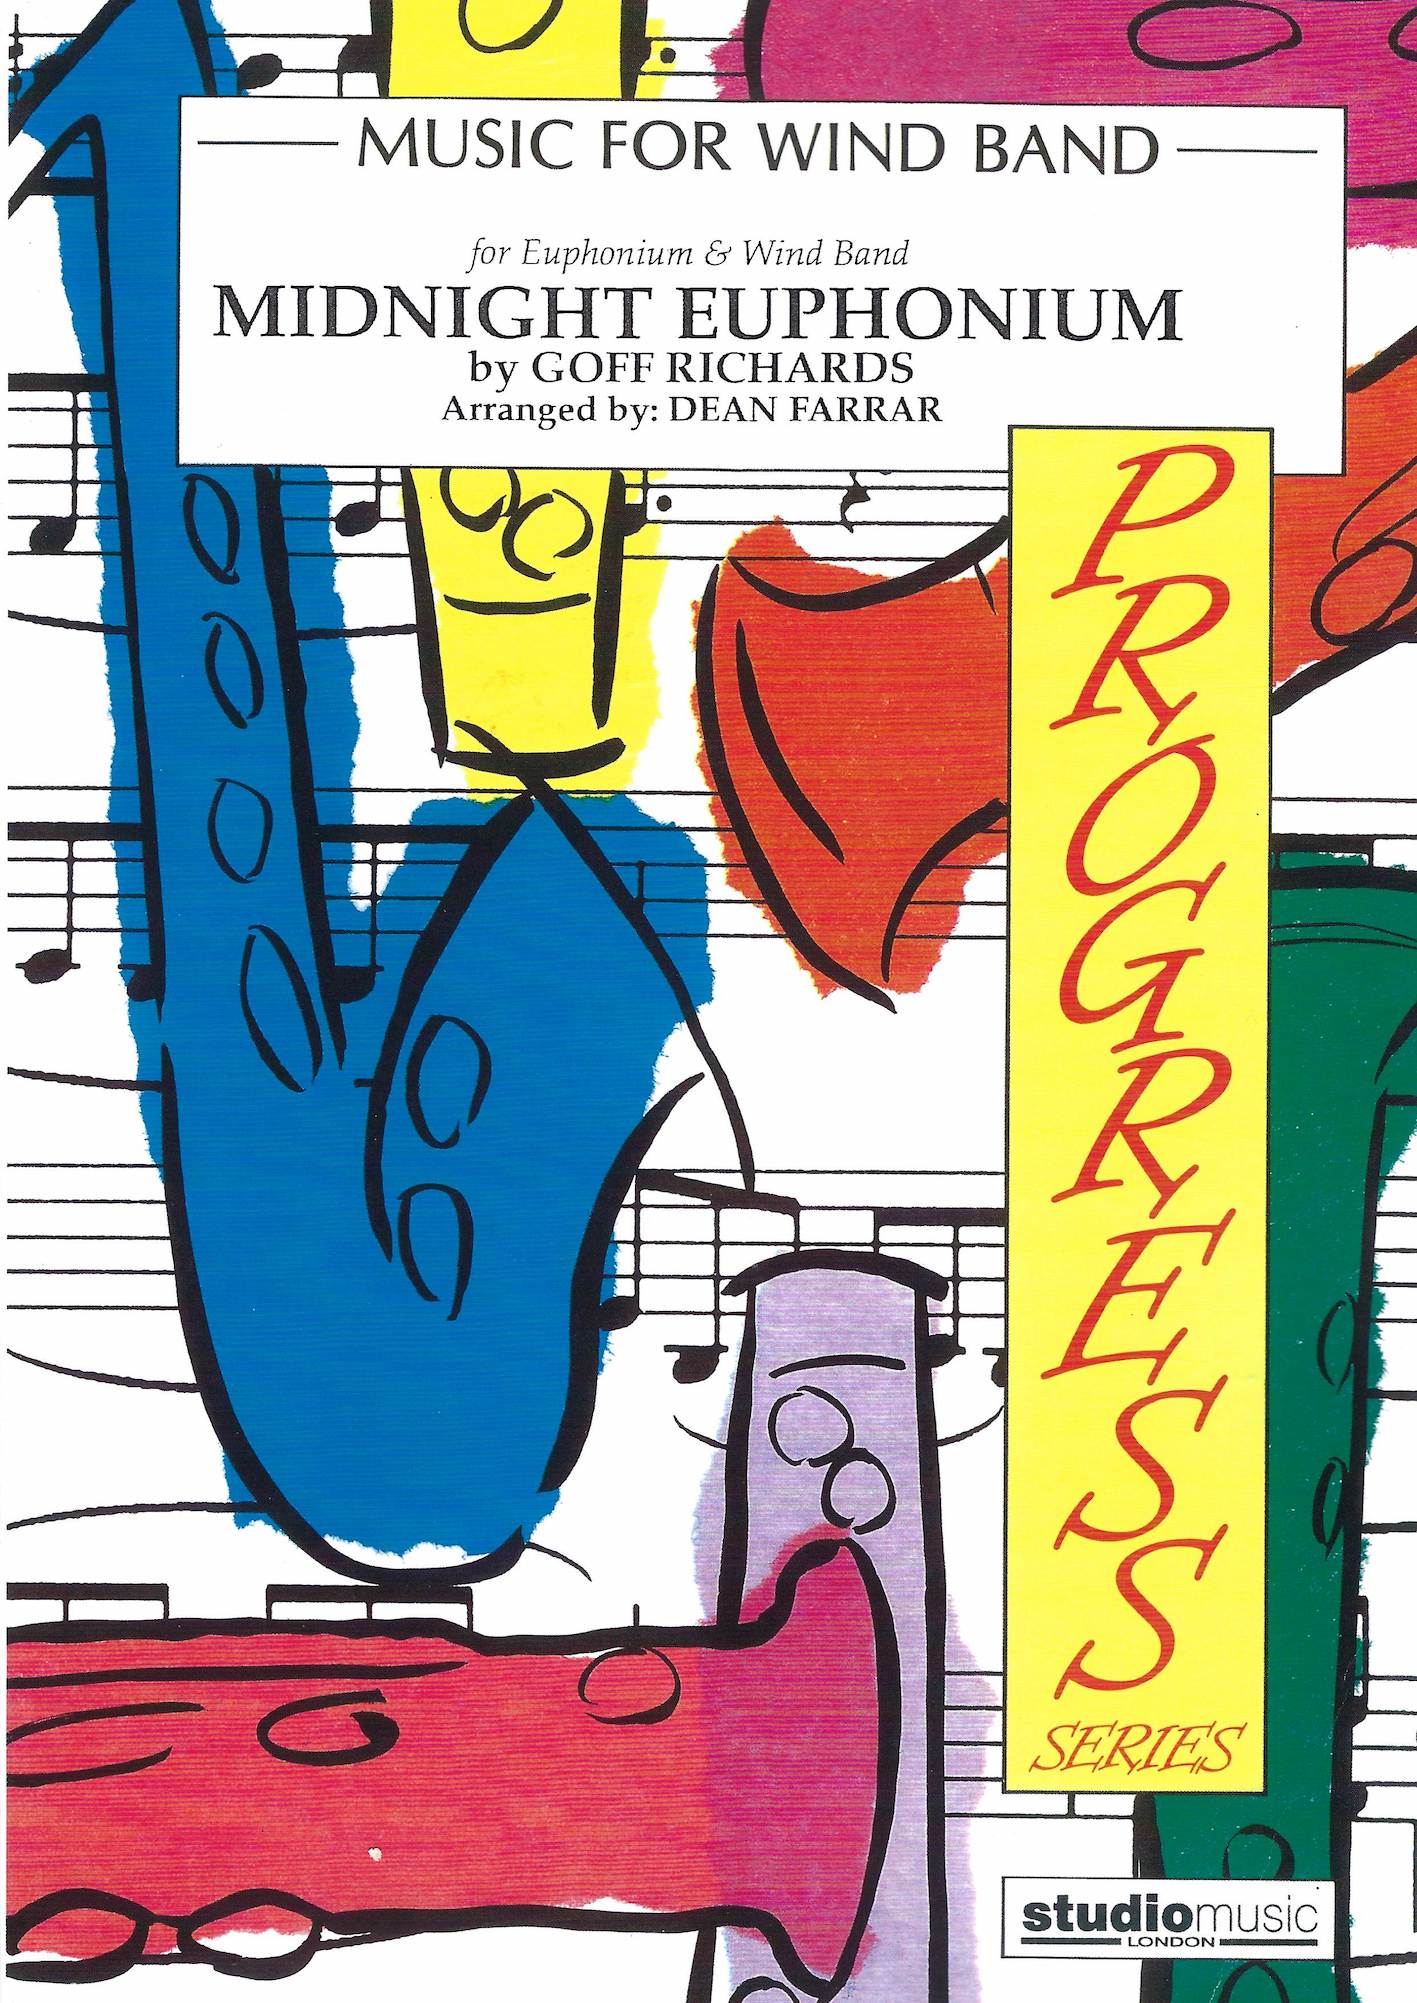 Midnight Euphonium - Goff Richards arr. Dean Farrar - Euphonium and Wind Band/Harmonie